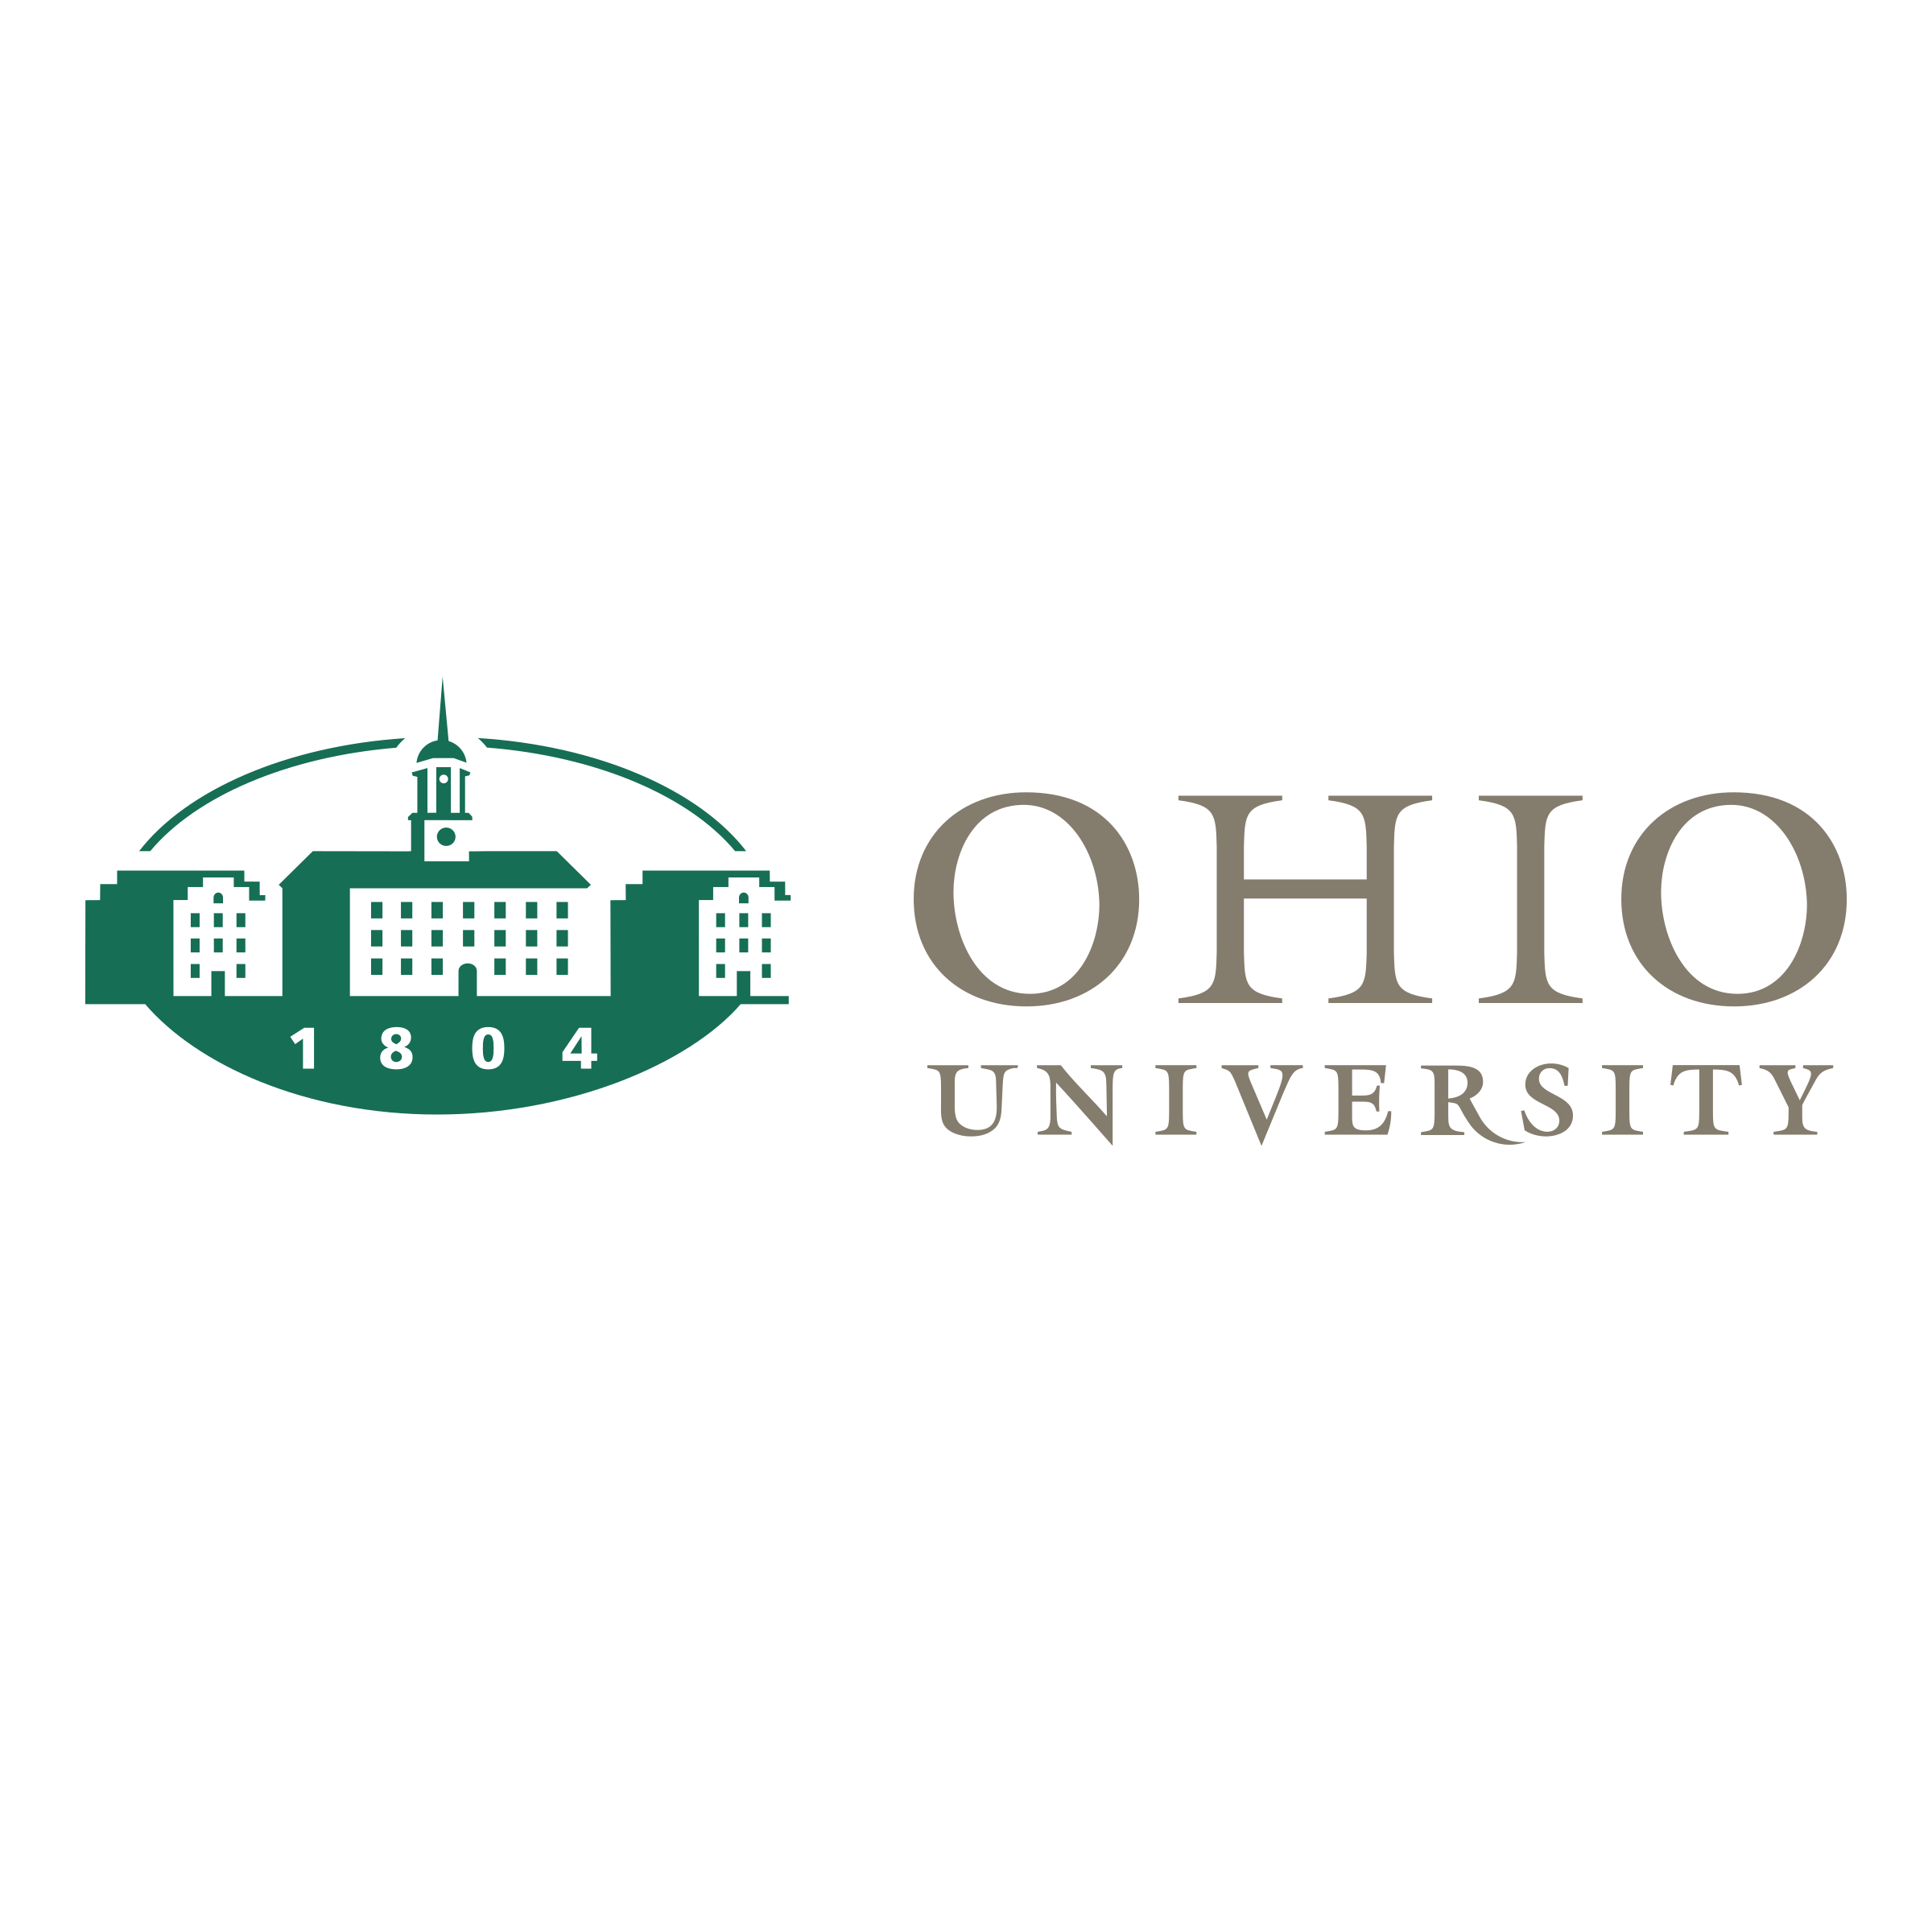 Ohio Logo - Ohio University Logo PNG Transparent & SVG Vector - Freebie Supply